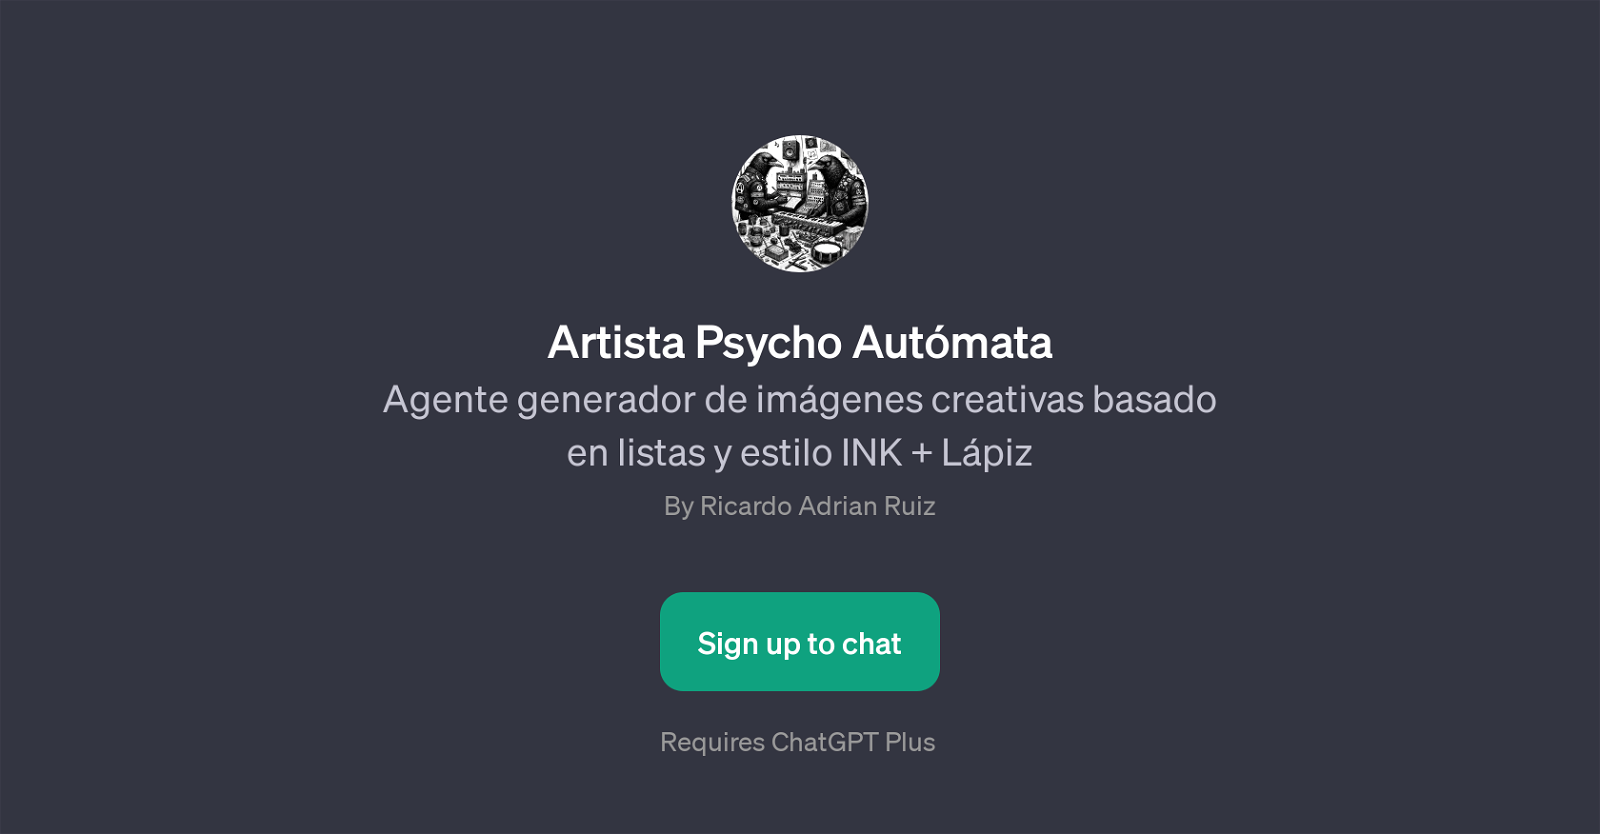 Artista Psycho Autmata website